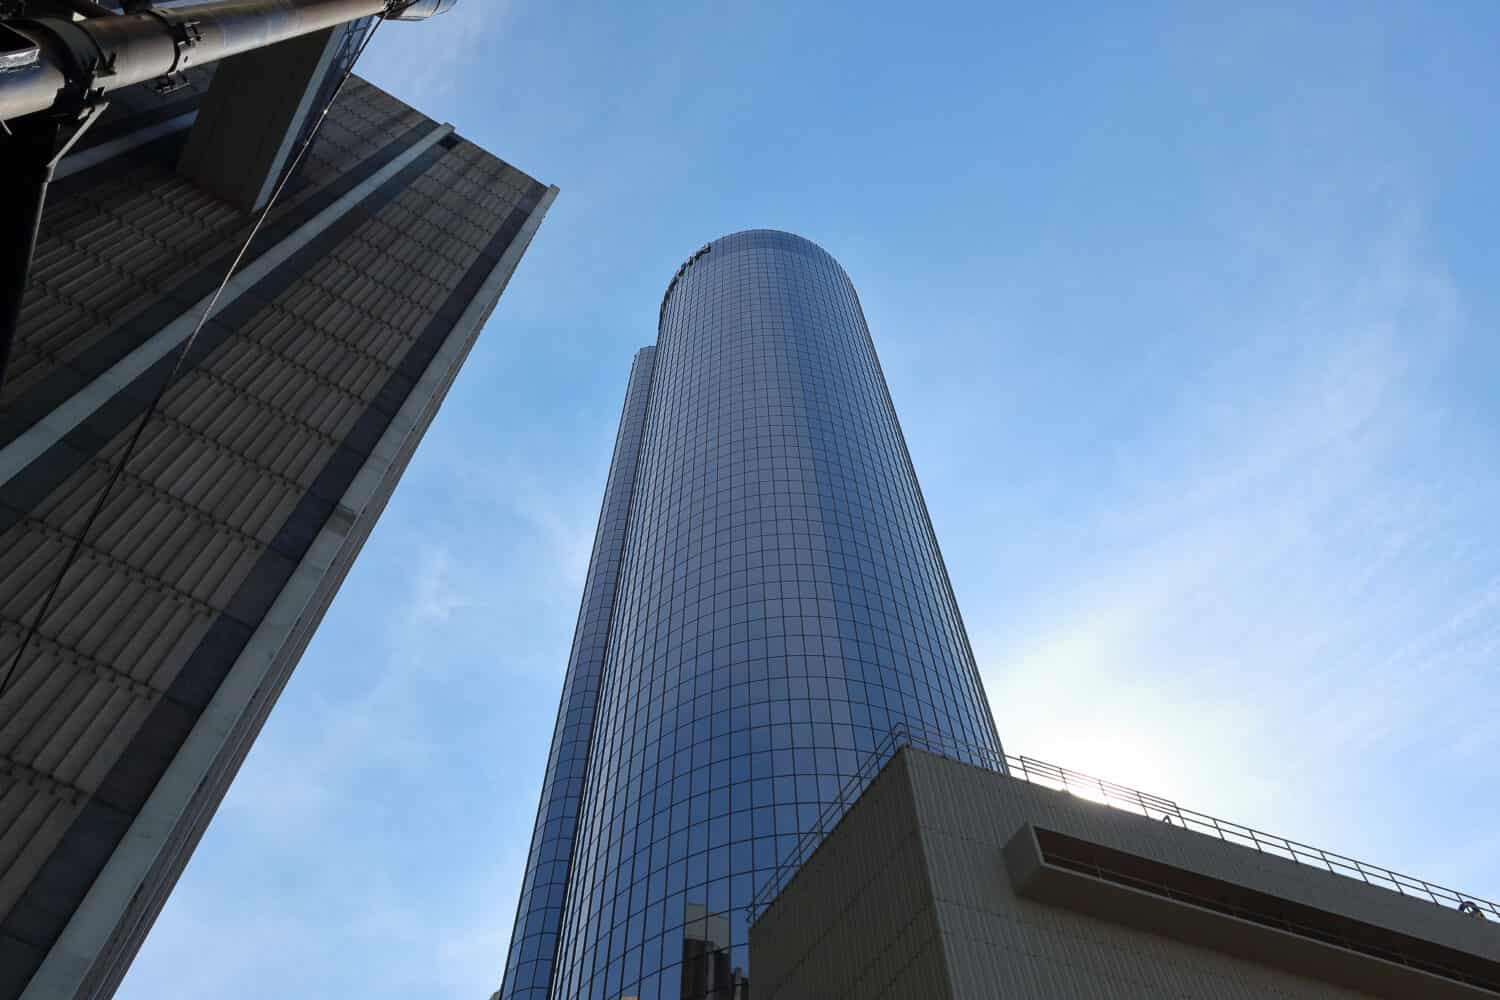 The Westin Peachtree Plaza, Atlanta, GA : r/skyscrapers